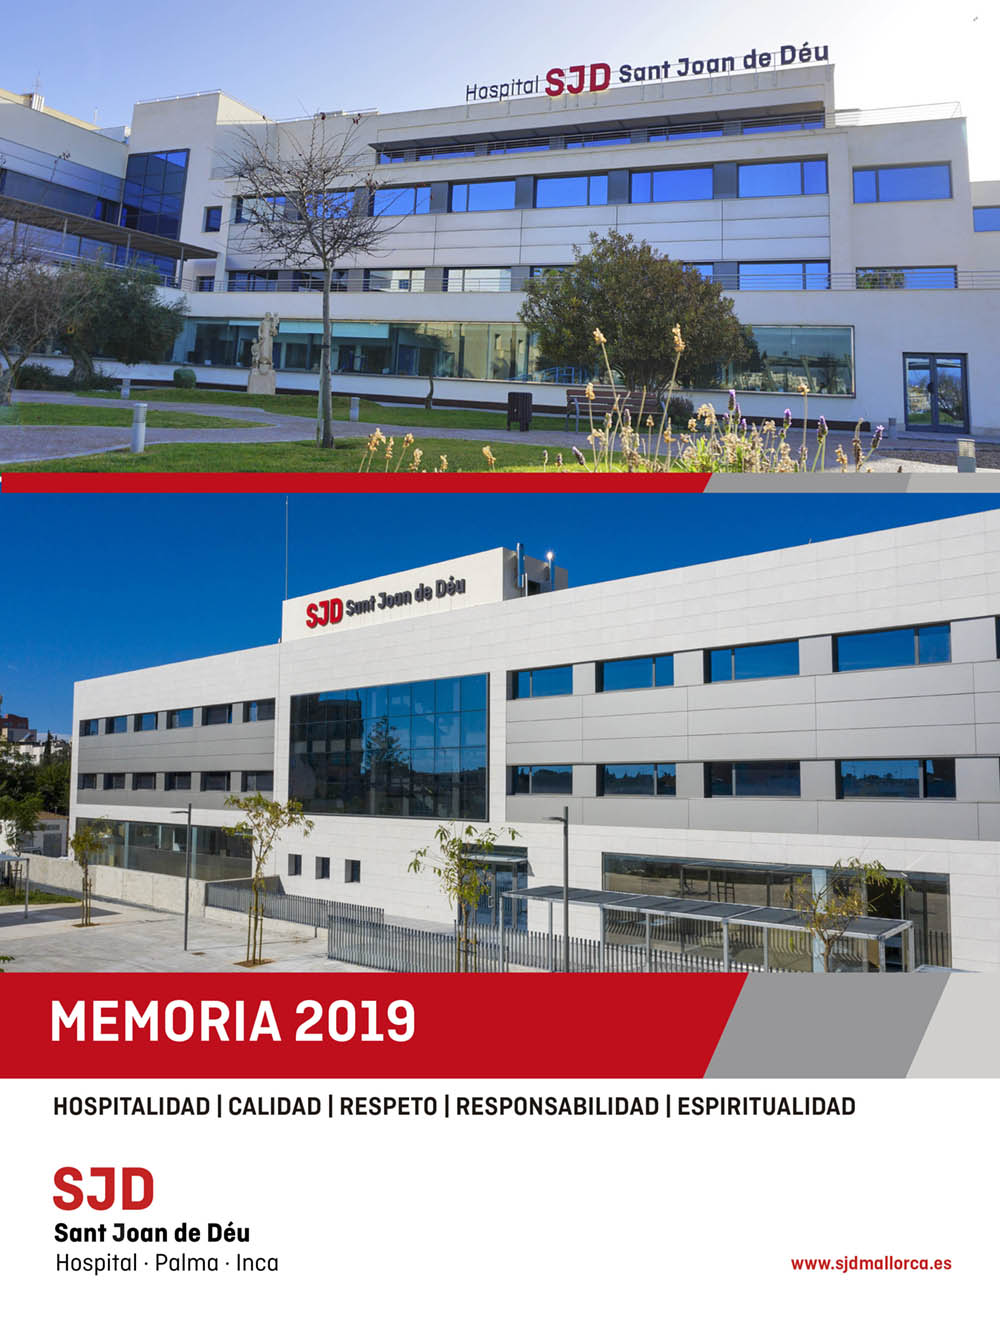 Memoria-2019-Hospital-Sant-Joan-de-Deu-Palma-·-Inca-portada-2.jpg